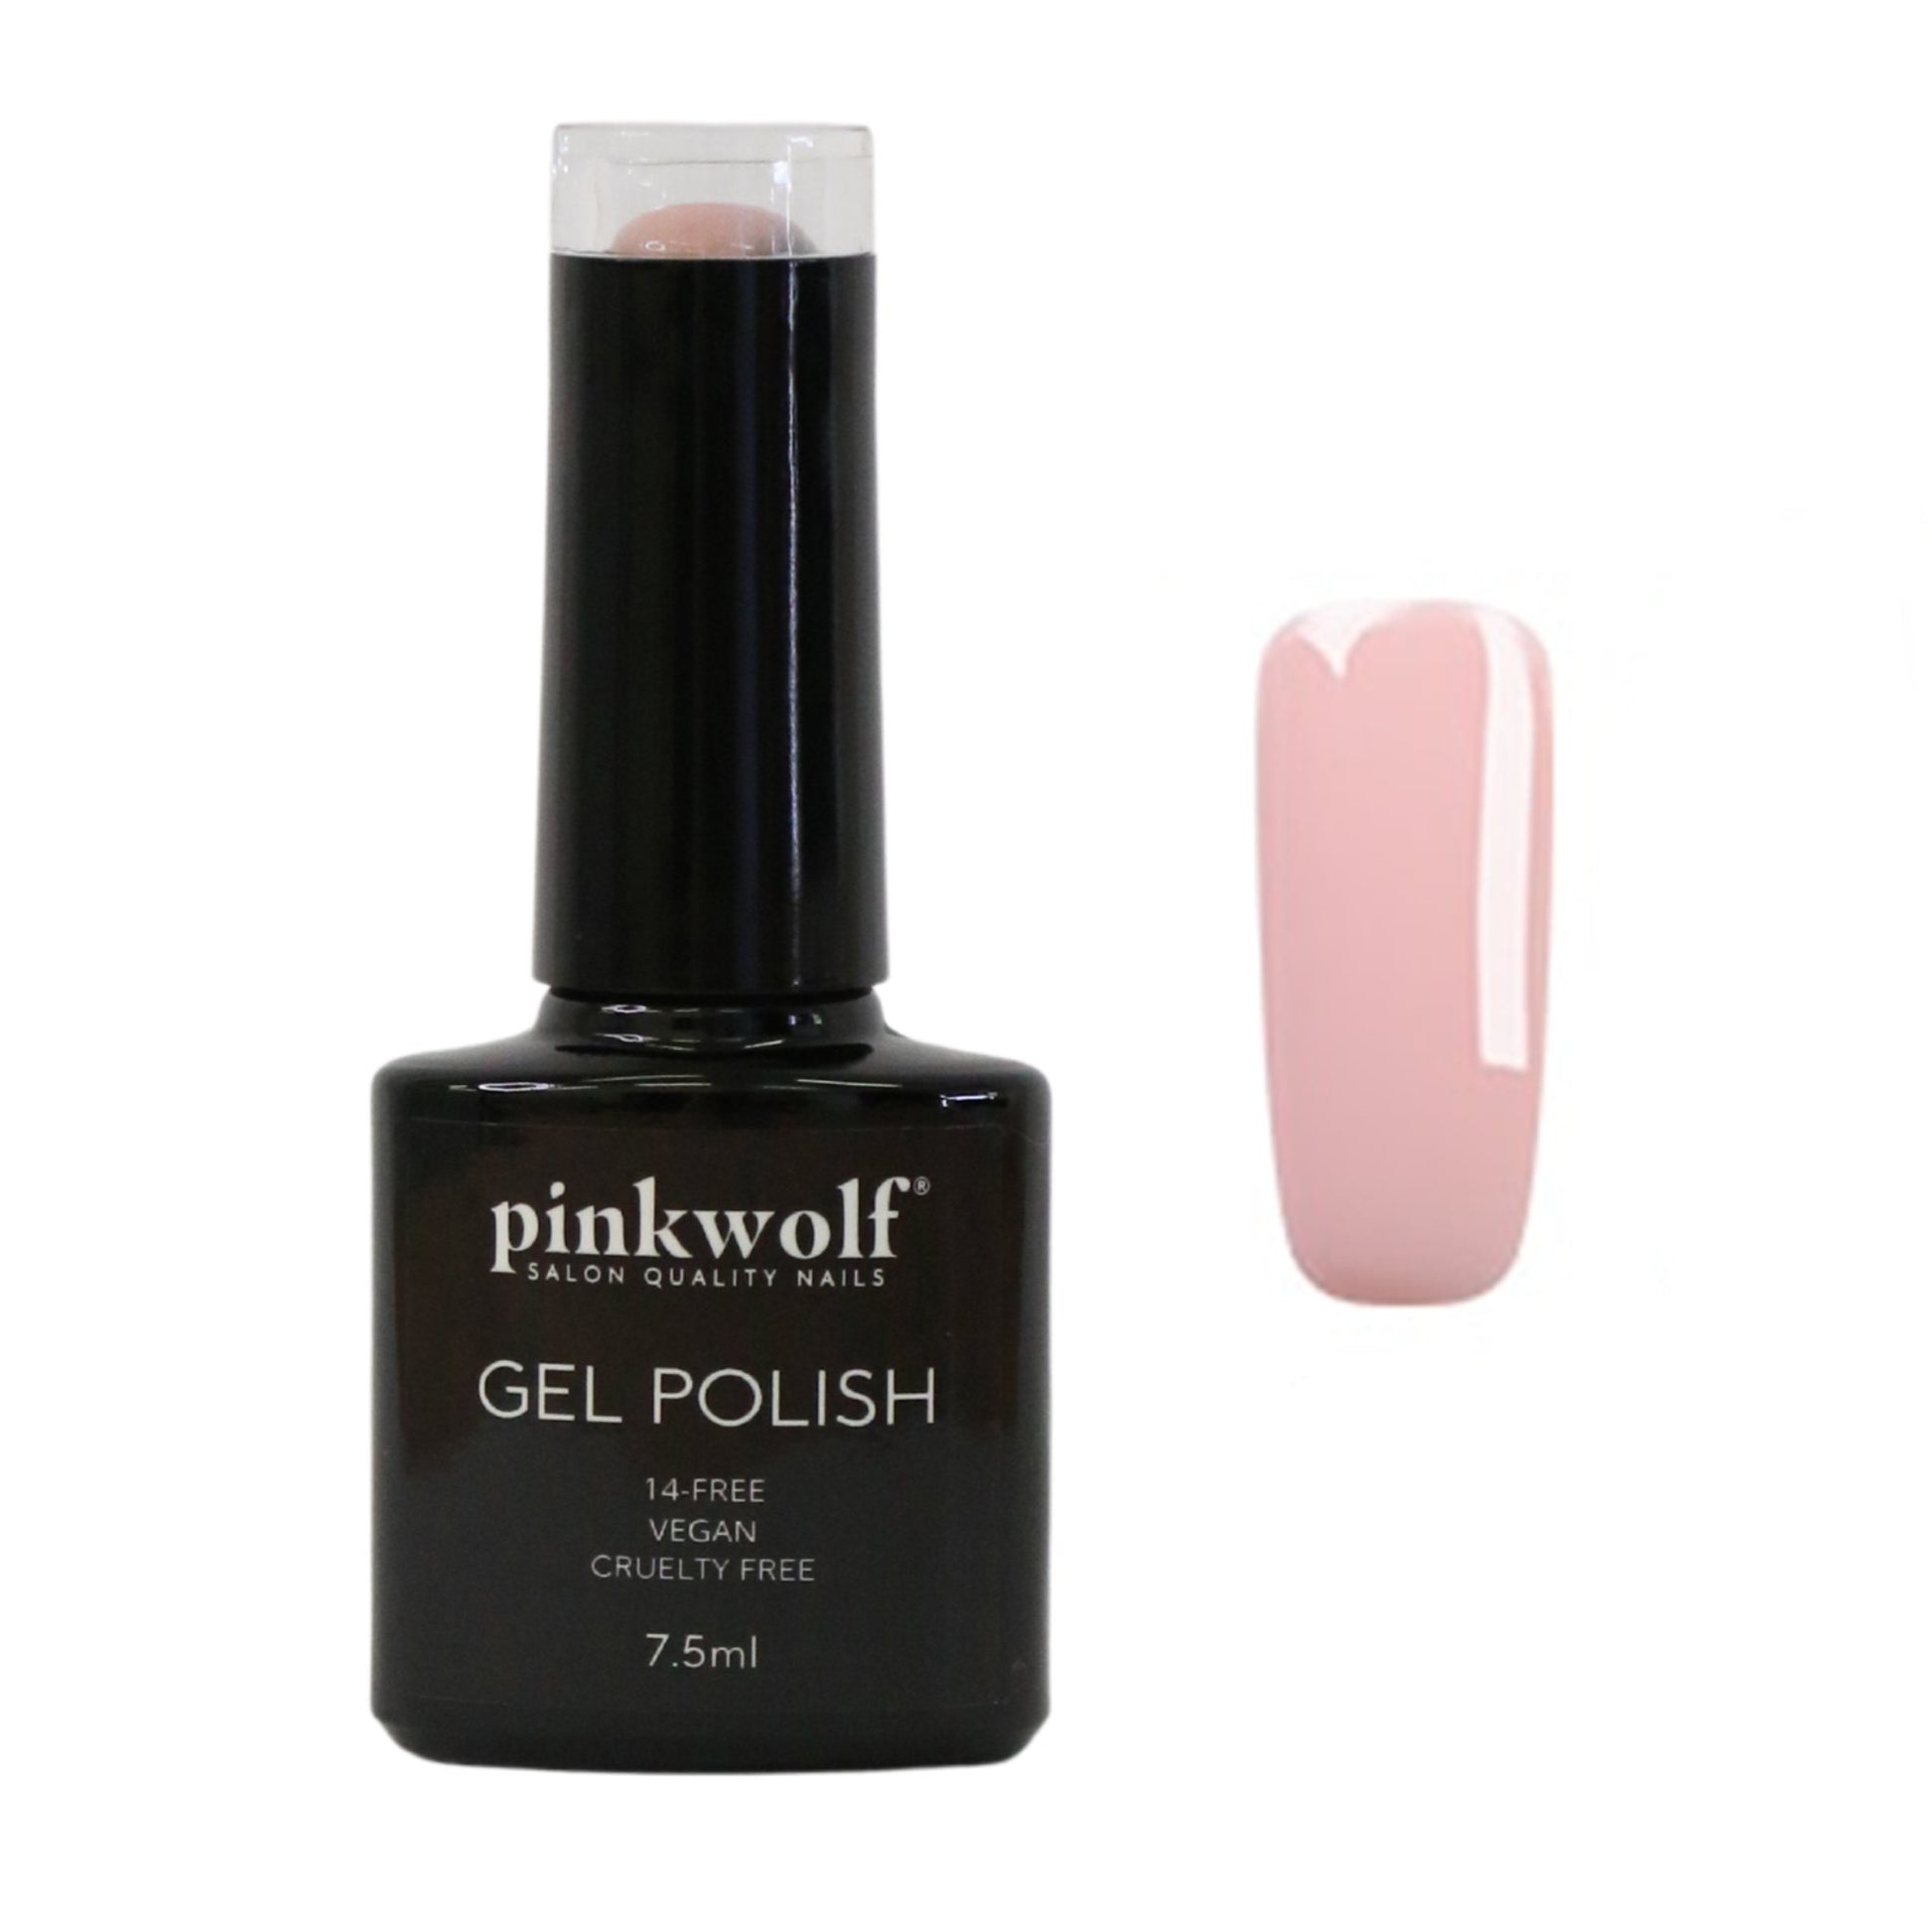 Pinkwolf gel nail polish pale pink 7.5ml bottle